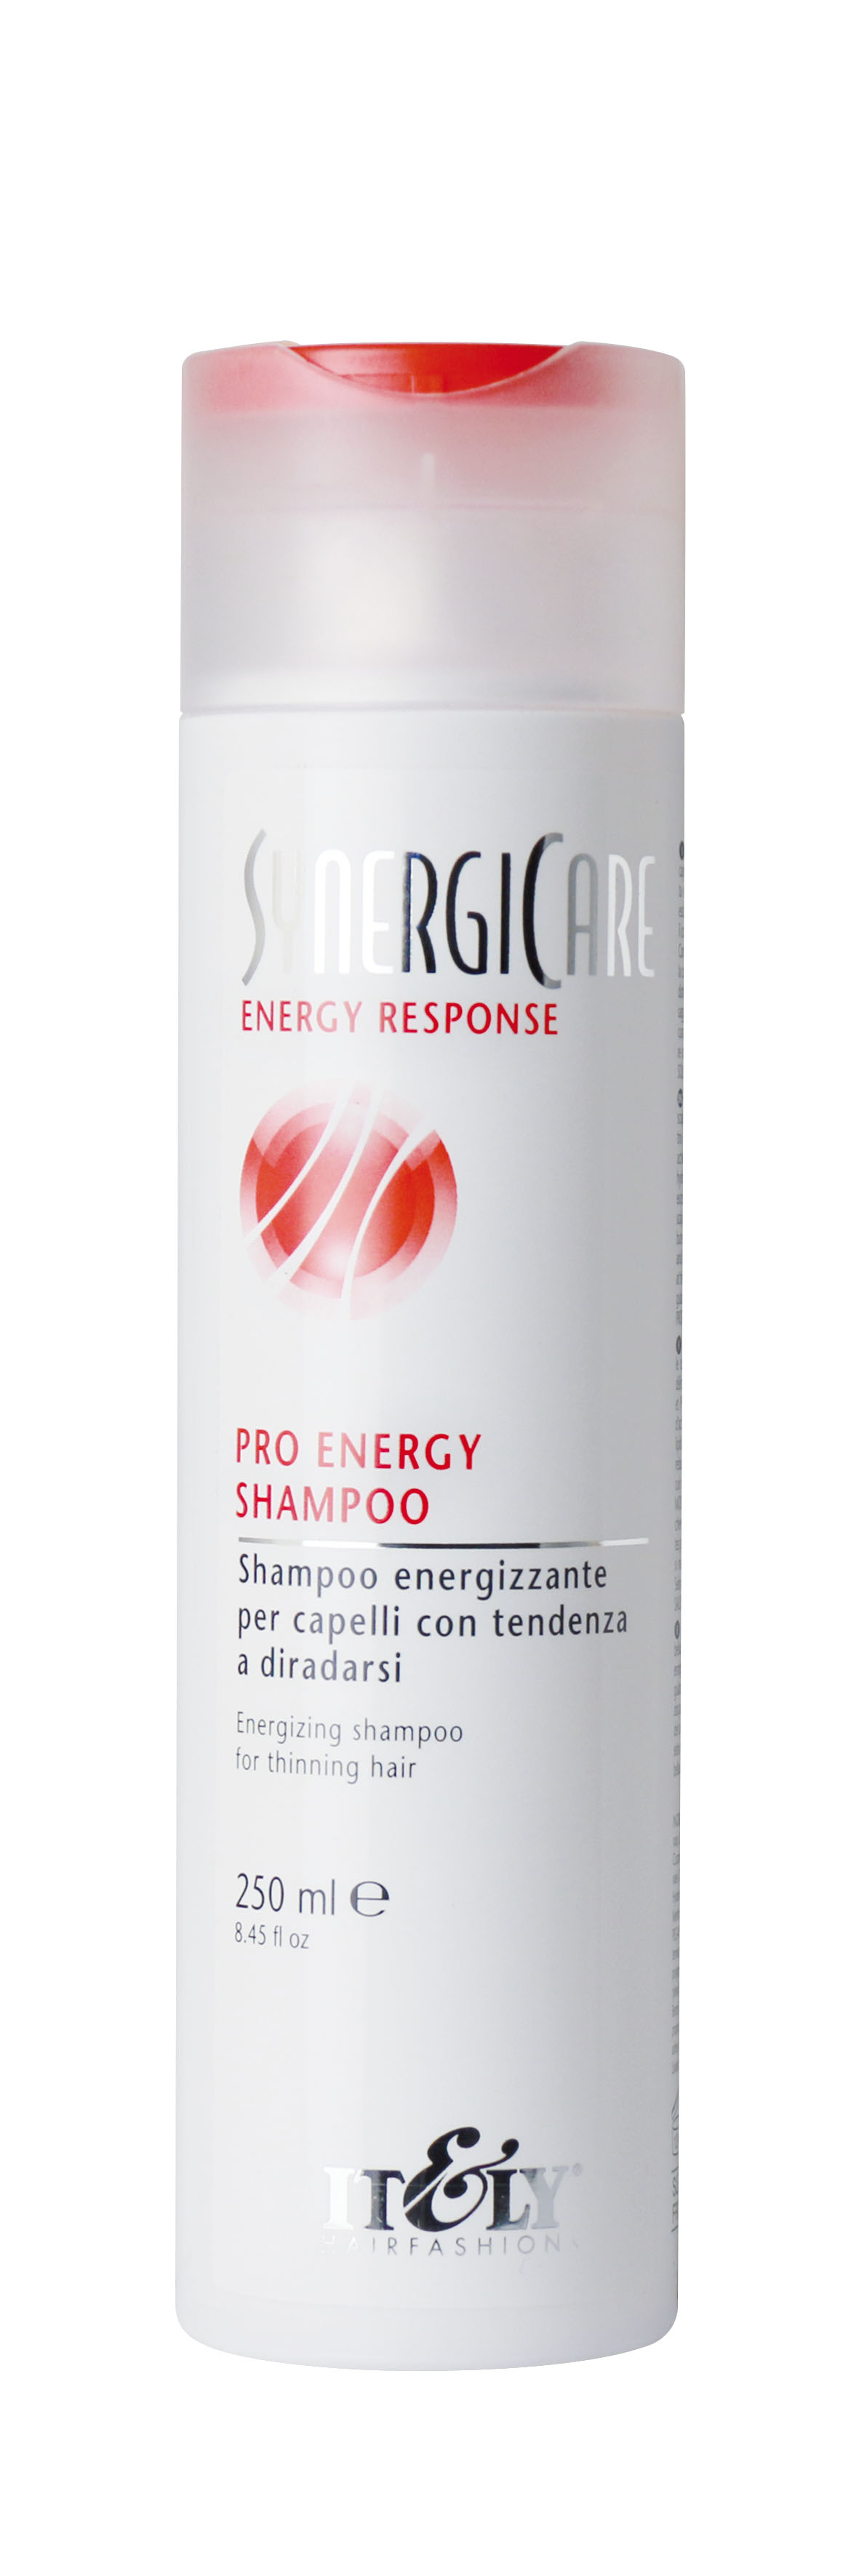 Pro Energy Shampoo